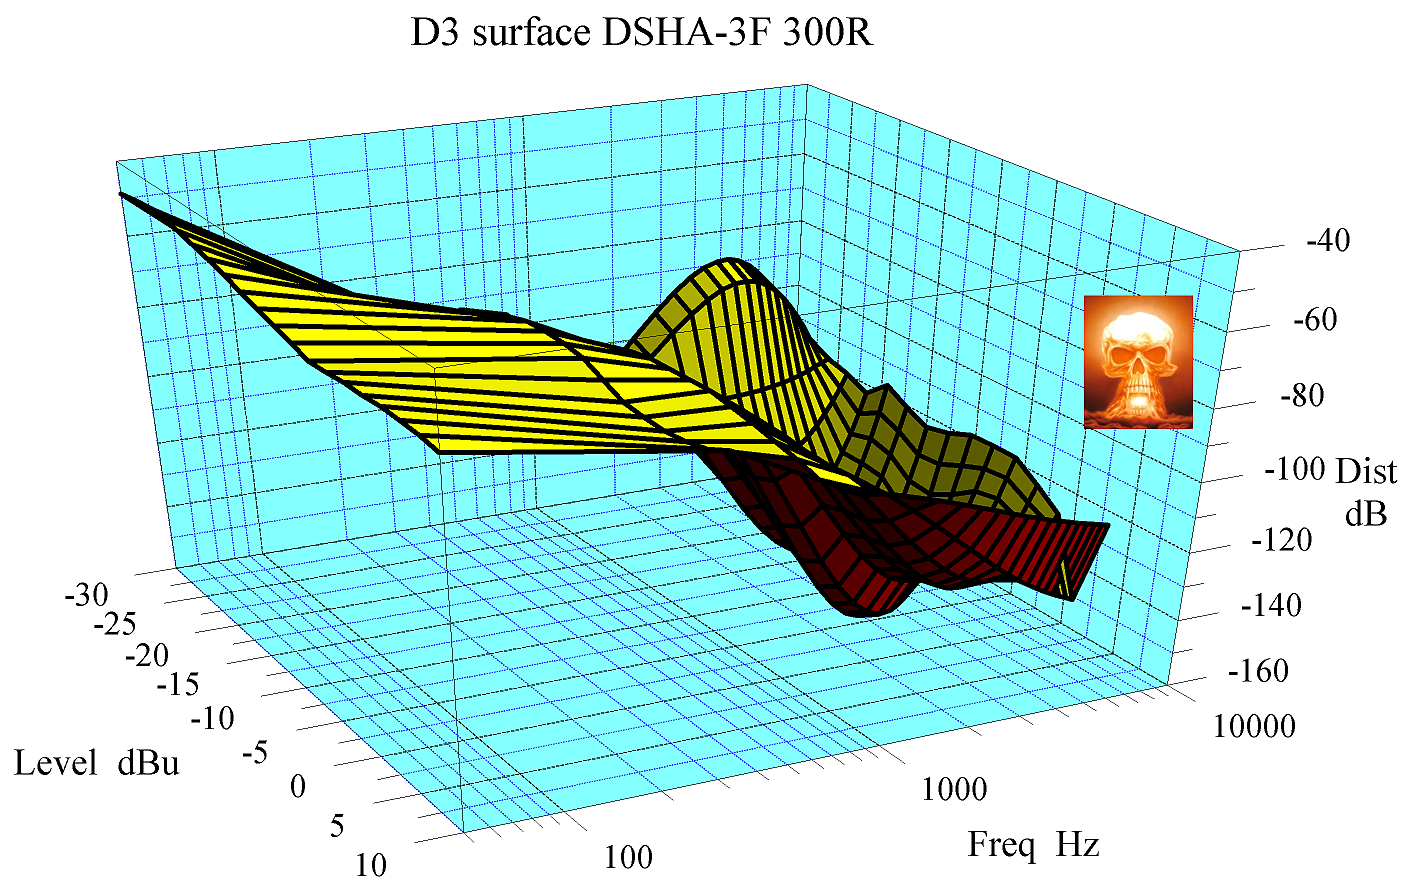 05 D3 surface DSHA-3F 300R rotated wm adj.png